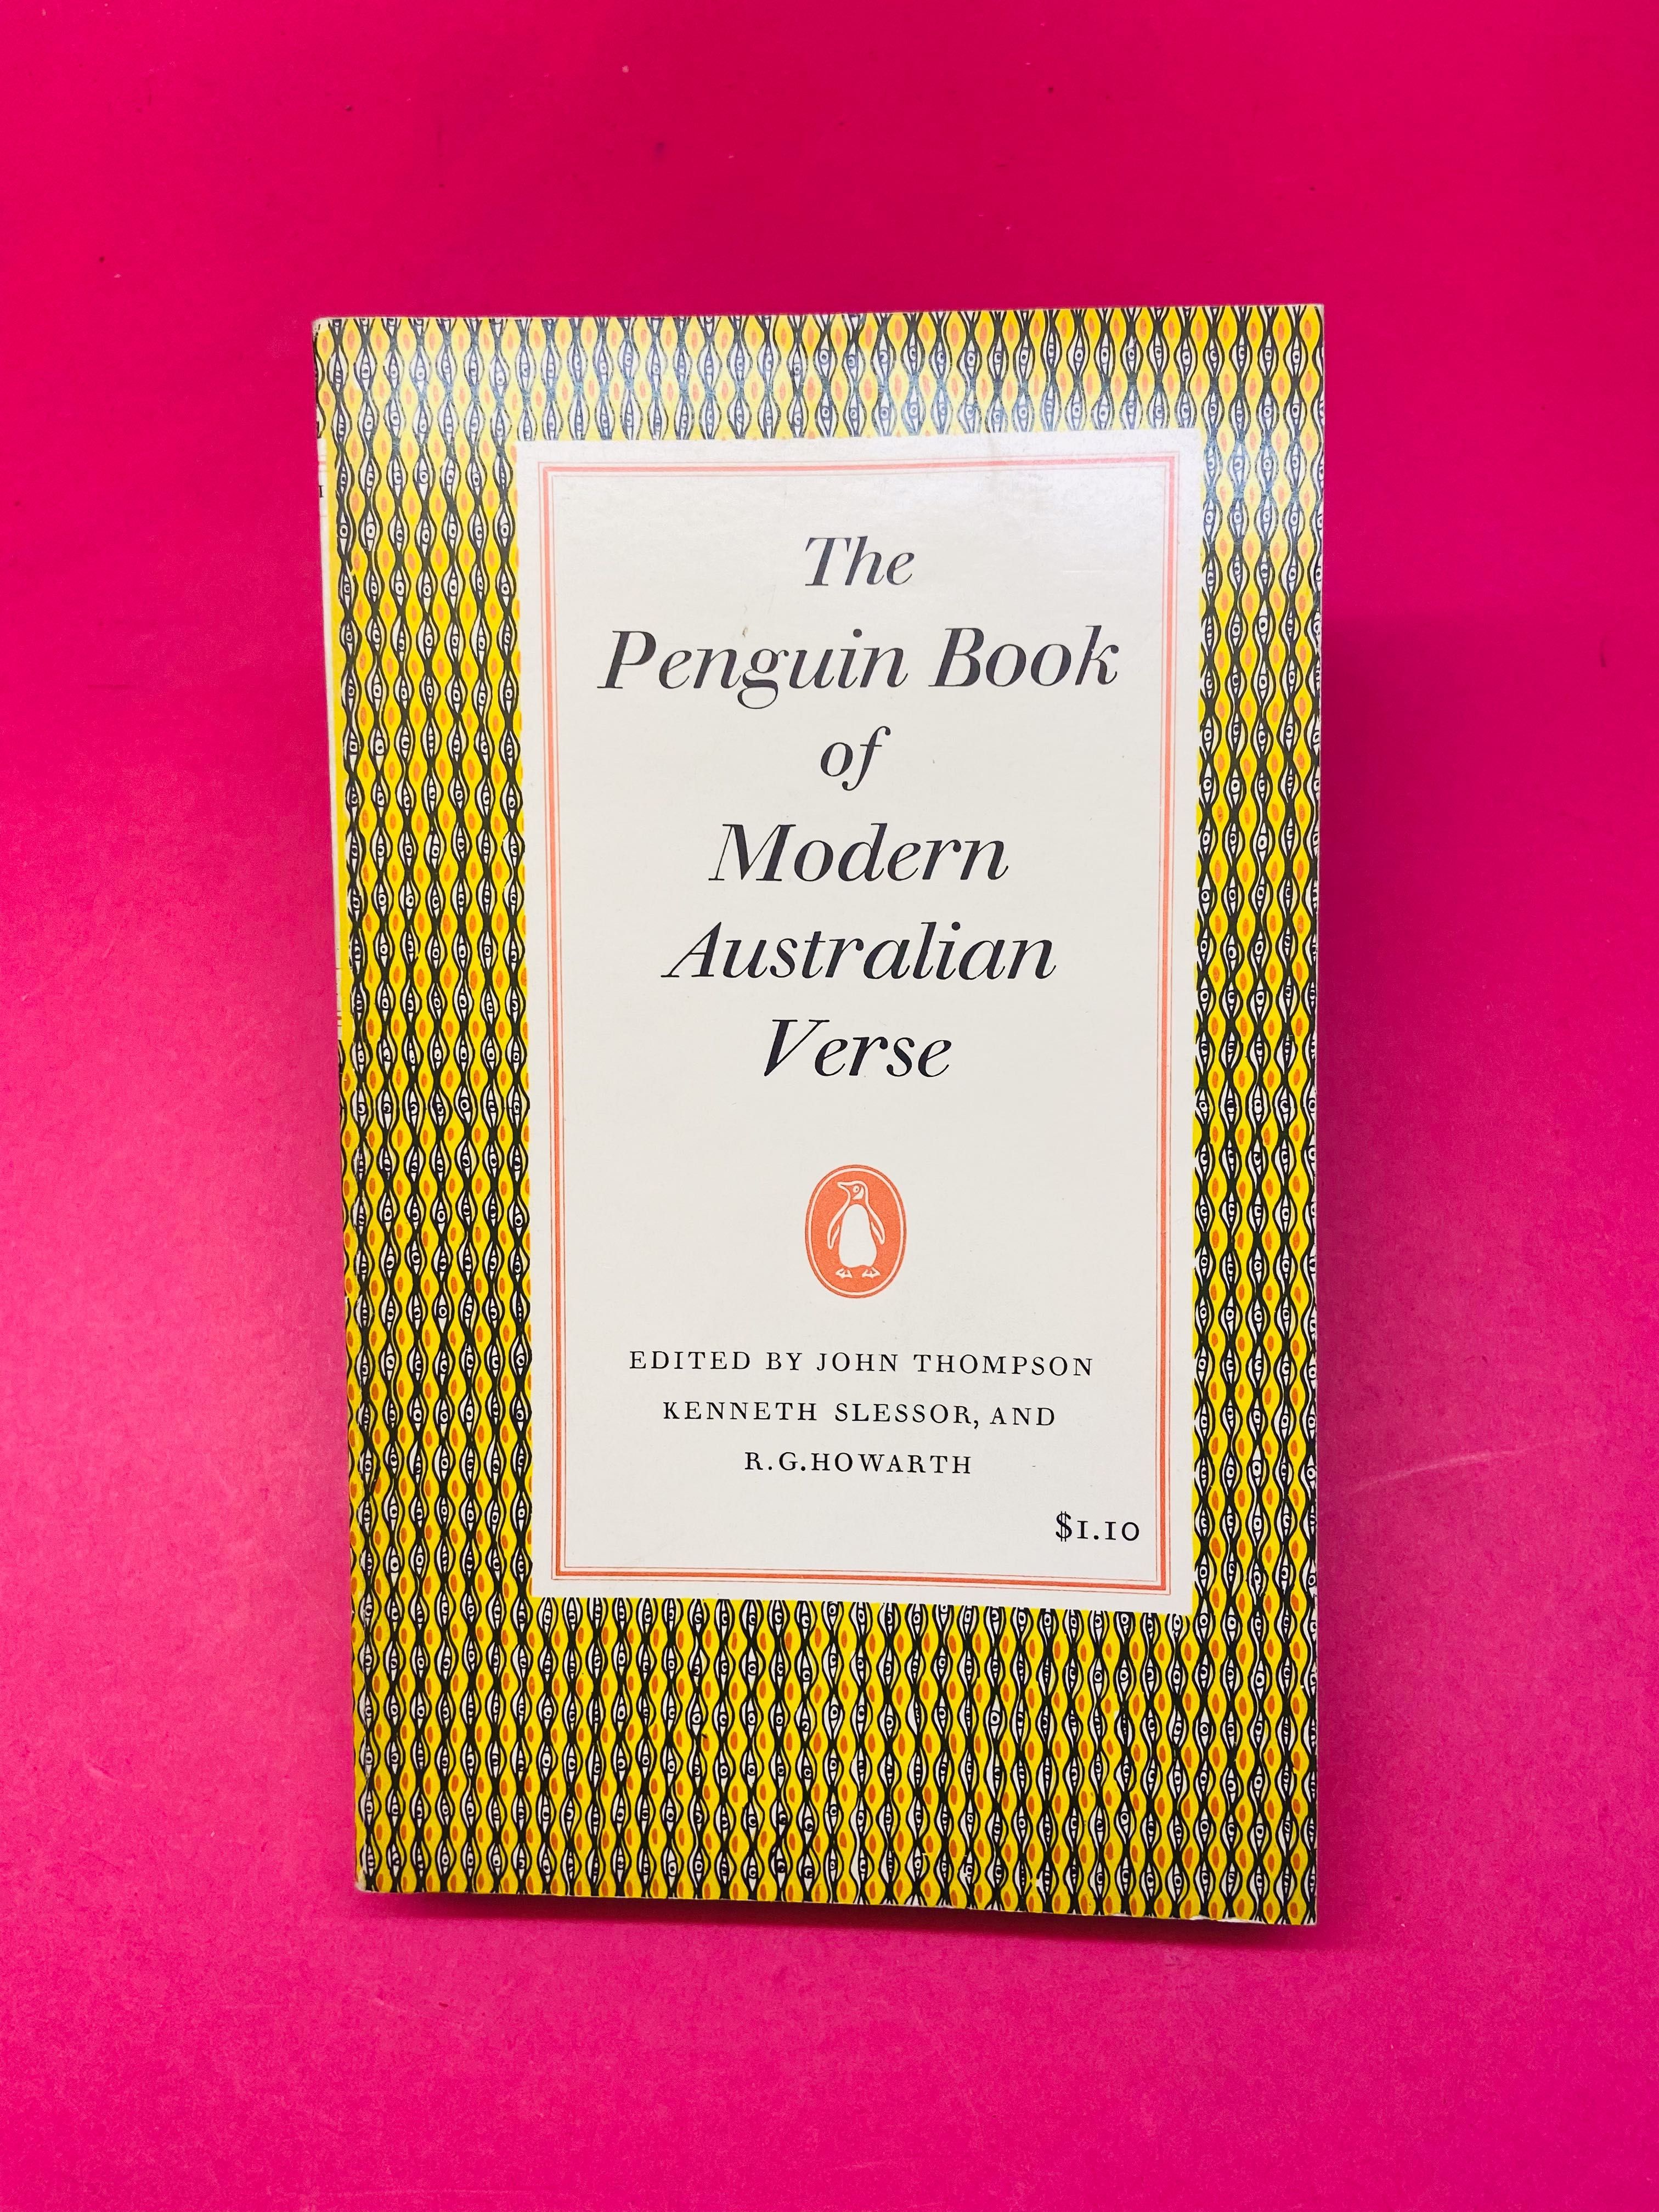 The Penguin Book of Modern Australian Verse